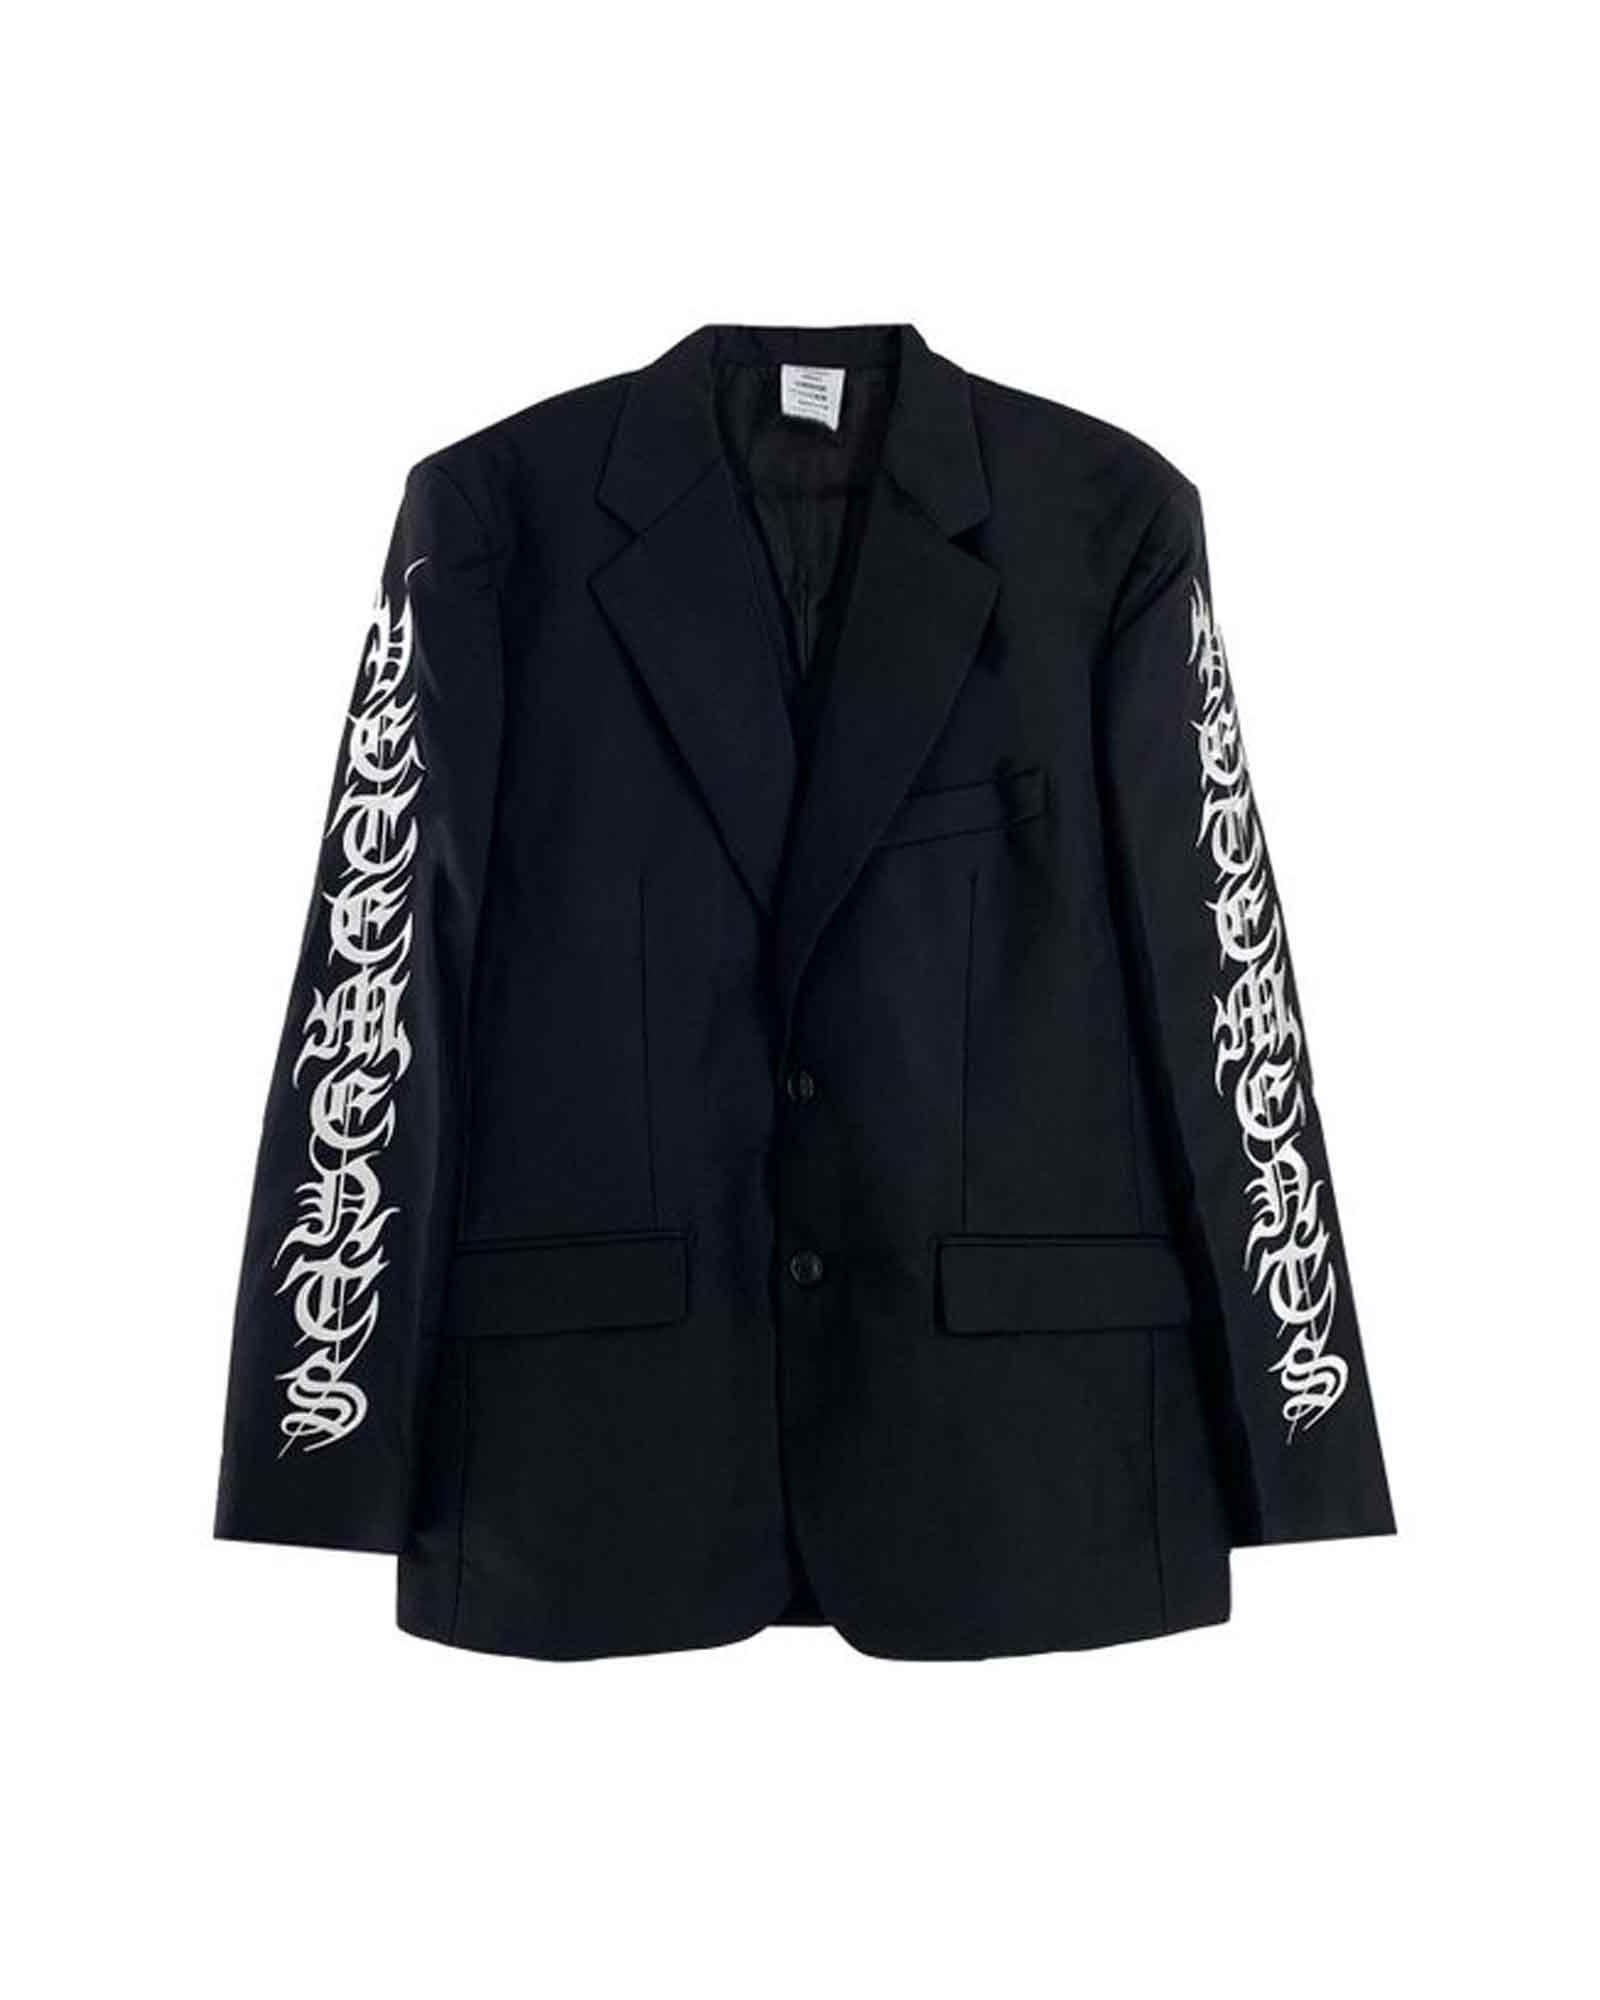 VETEMENTS - ヴェトモン/Gothic logo embroidered jacket/テーラードジャケット/Black | Detail